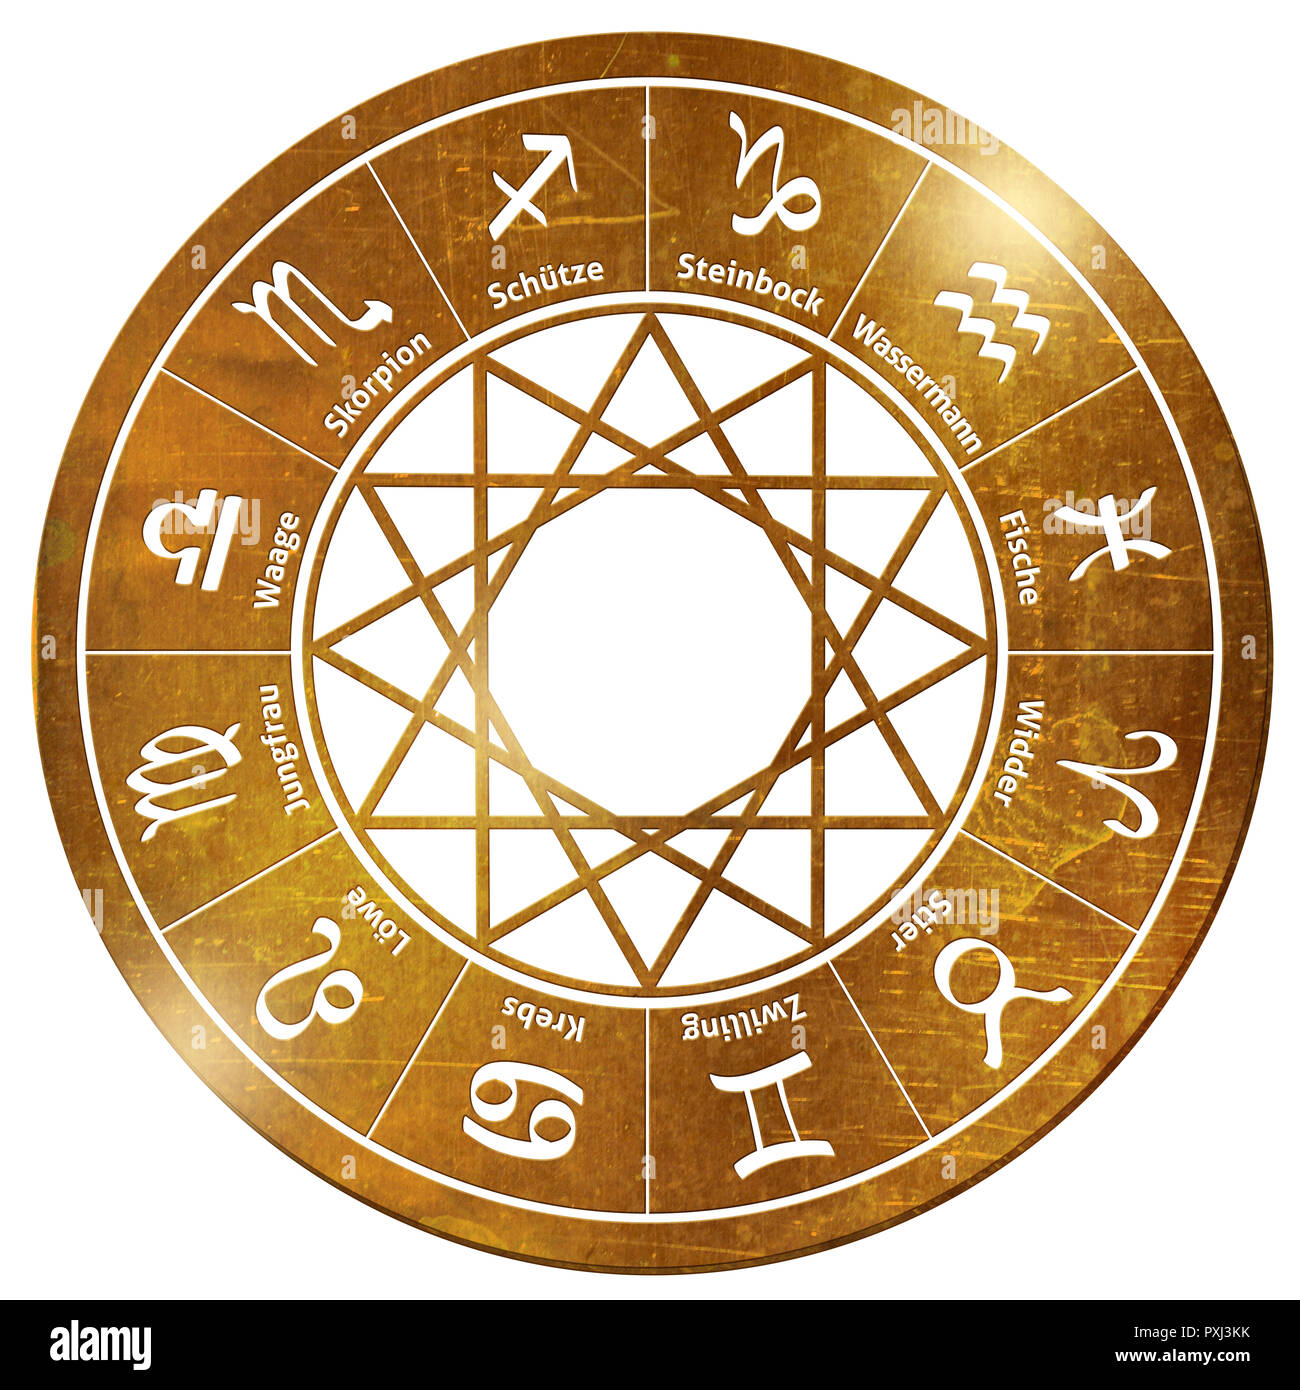 star wheel tarot horoscope stars gold chain pendant Stock Photo